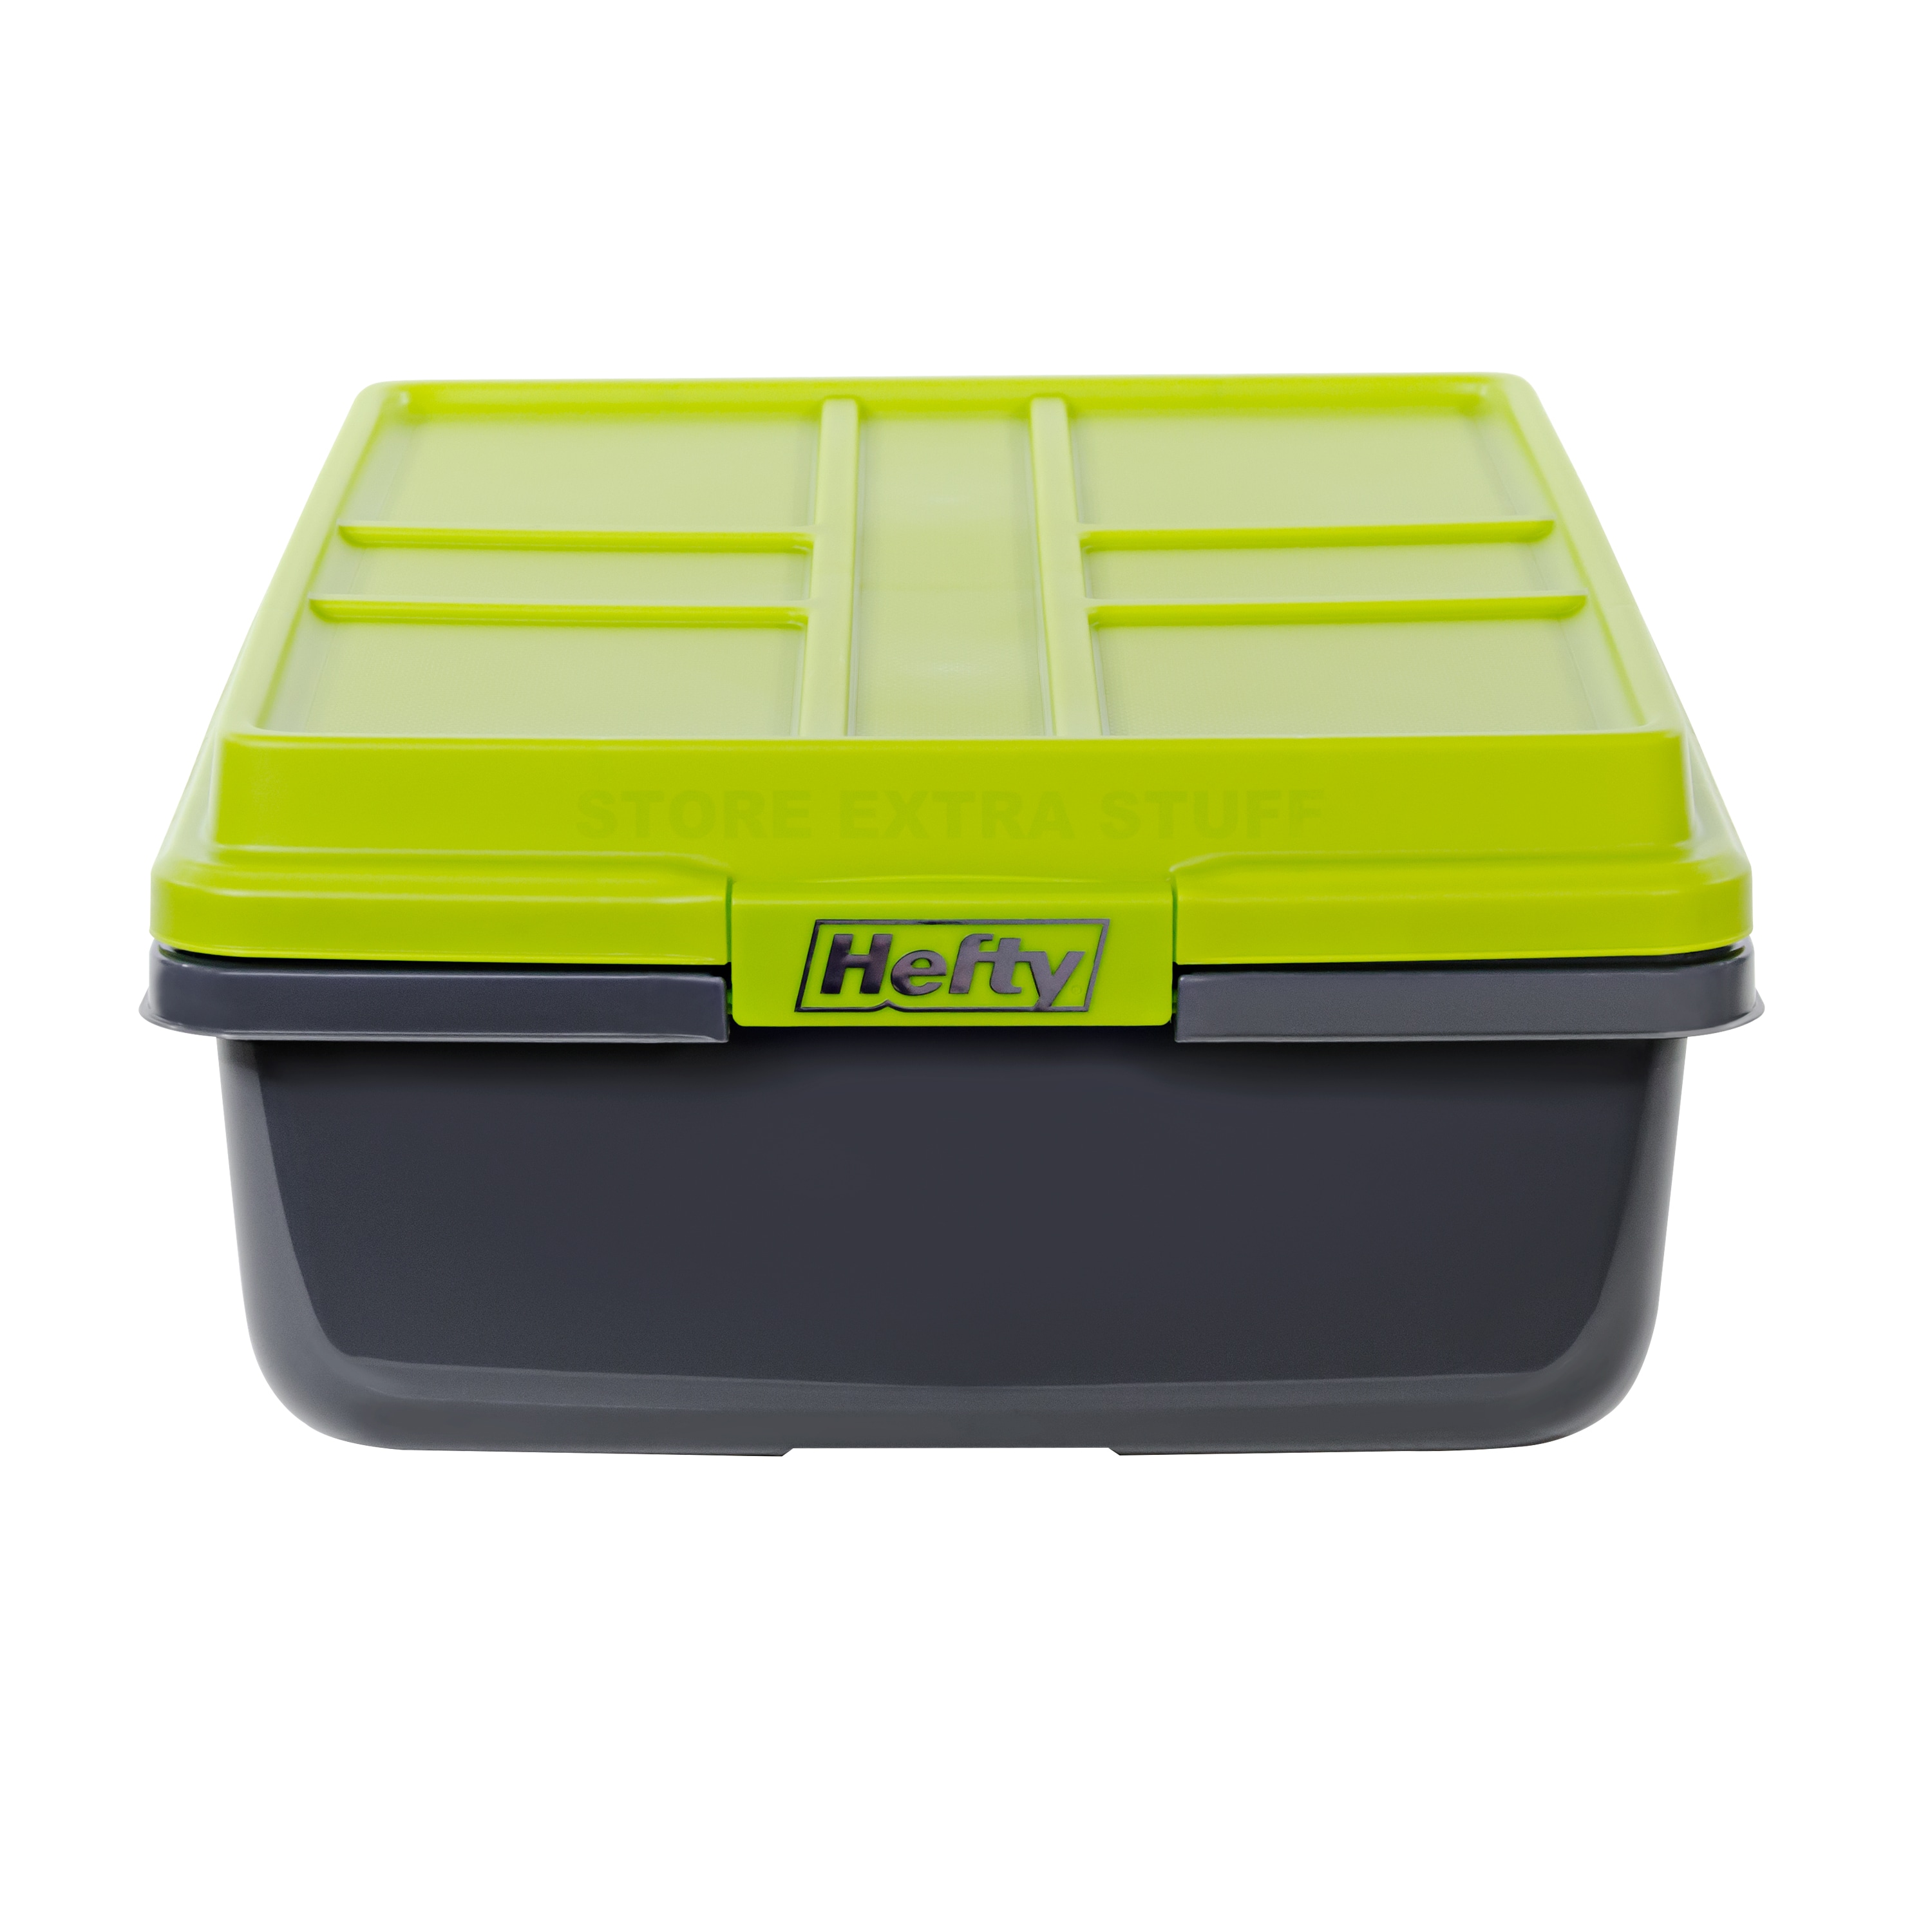 Hefty Hi-Rise storage bins >>>>> 10/10 🌟 #heftyhirise